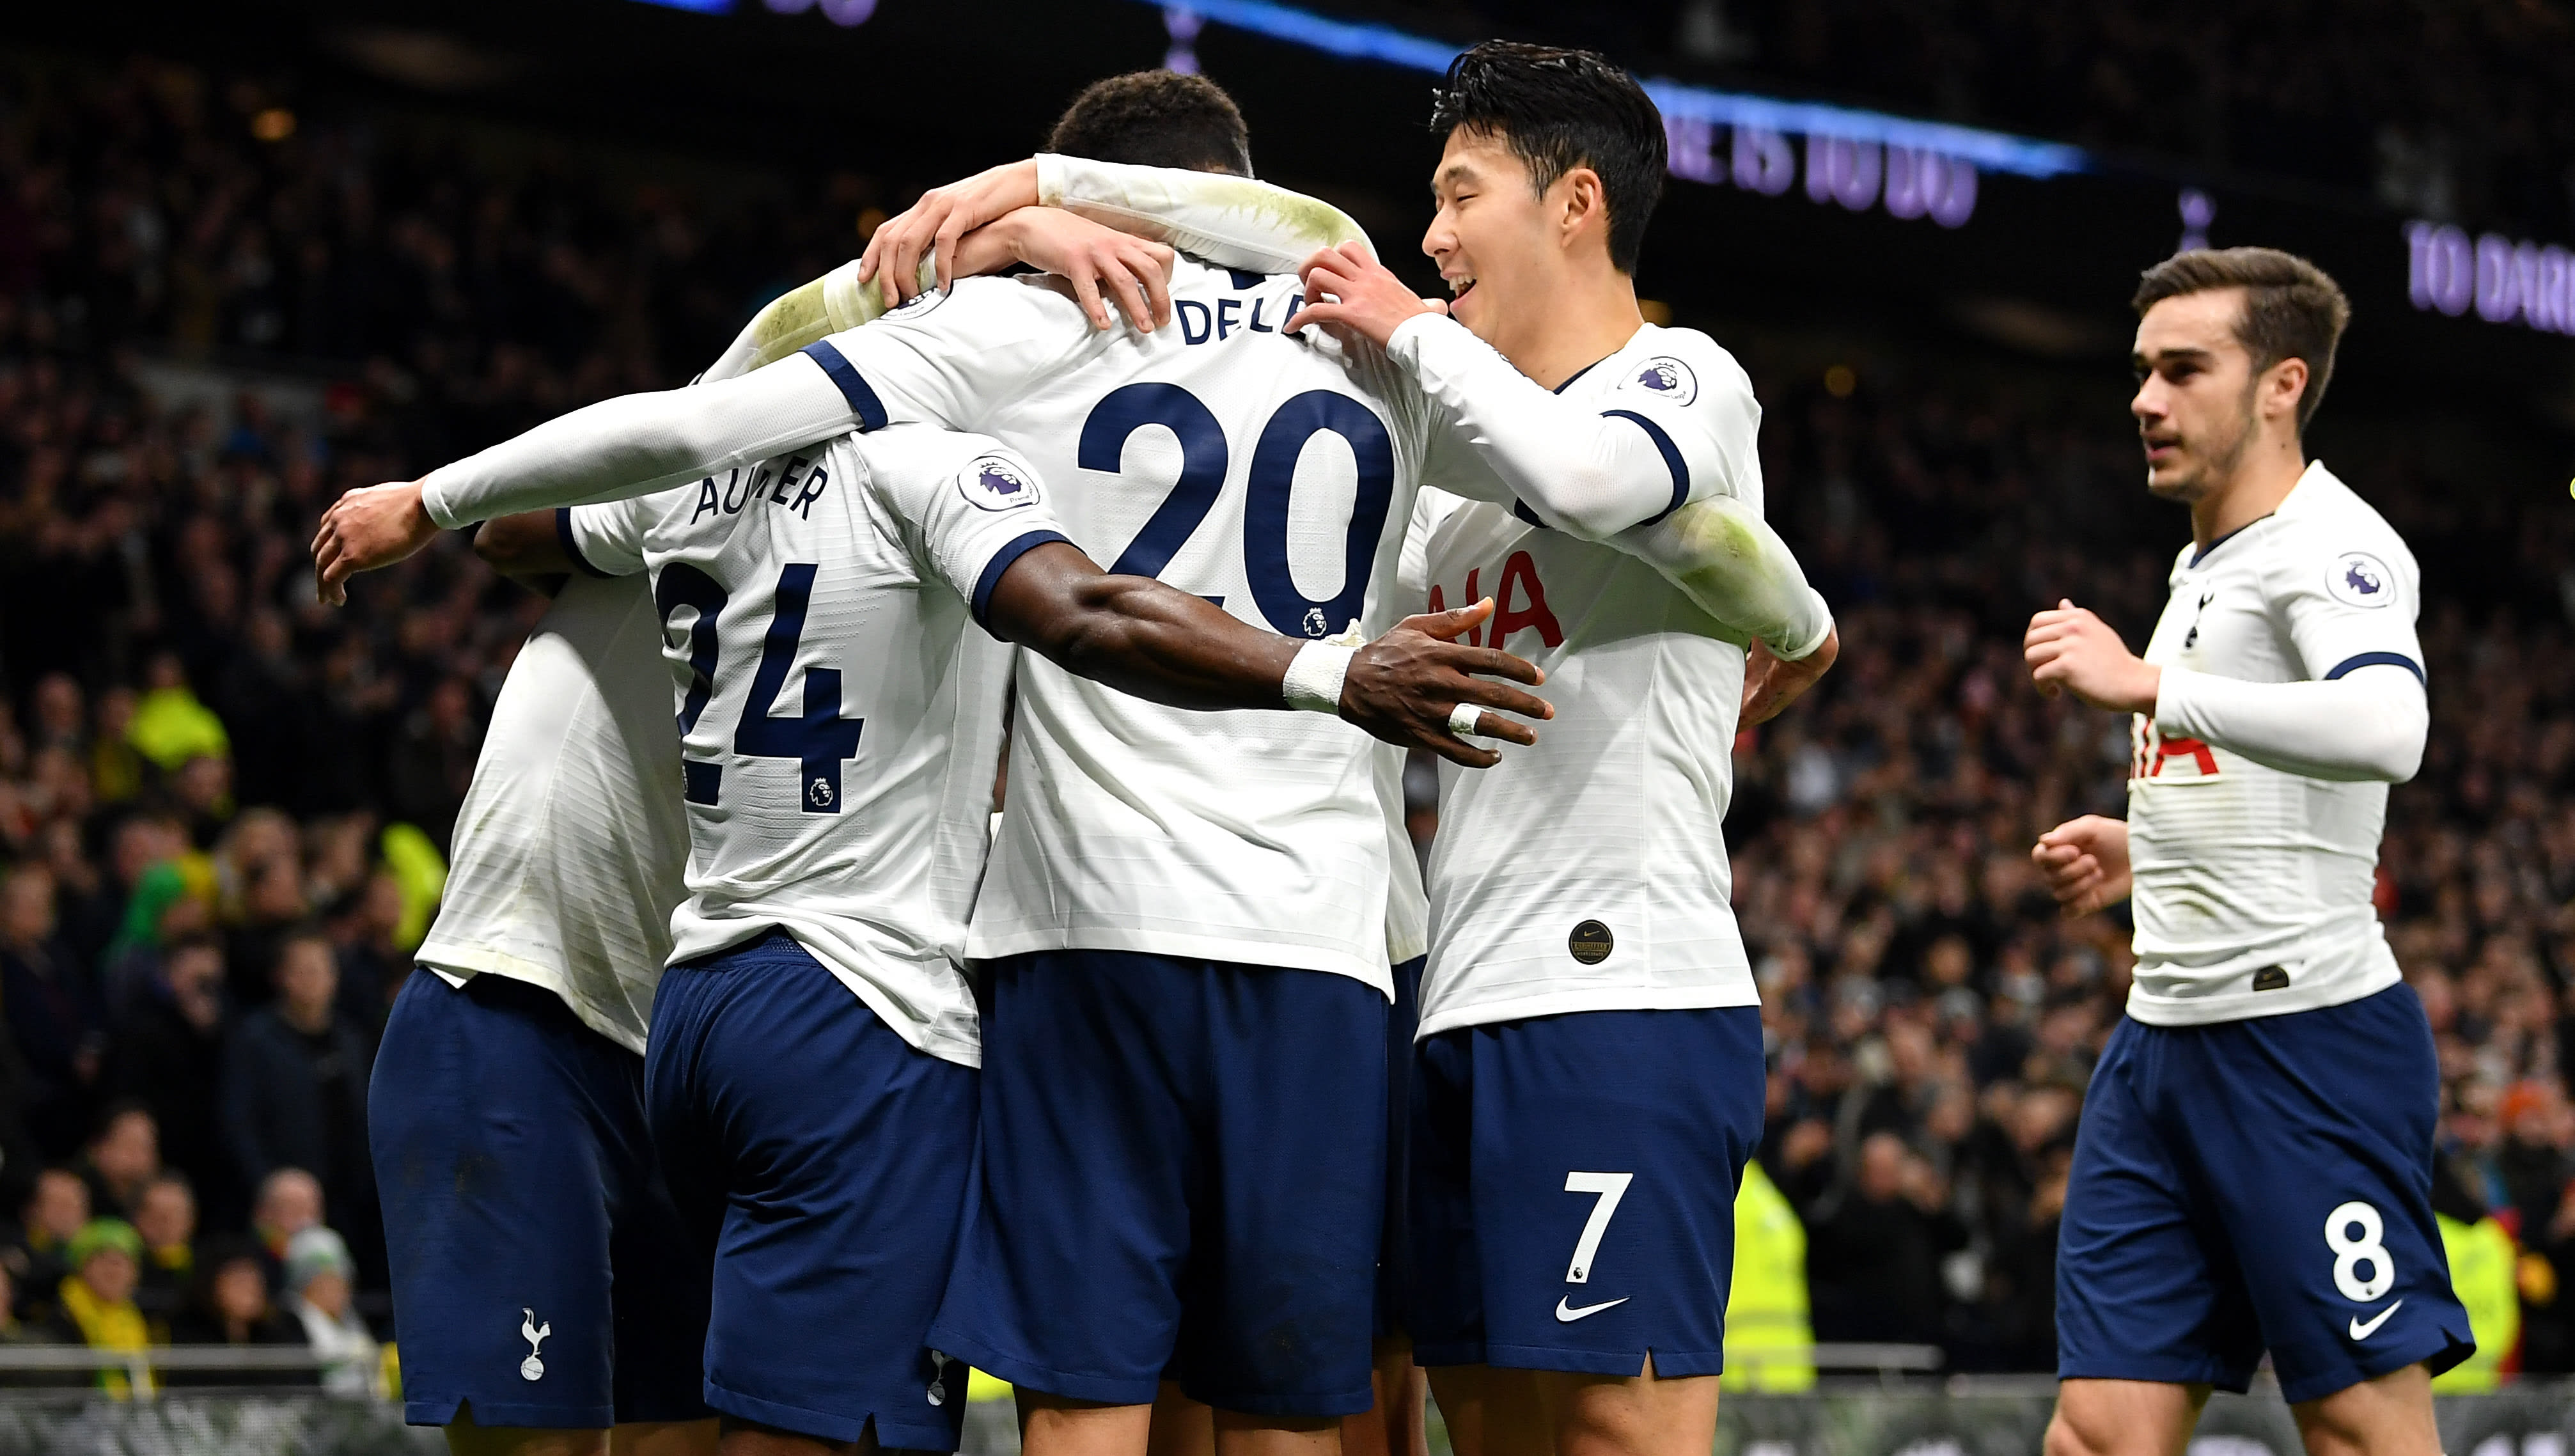 Tottenham players celebrate after scoring a goal